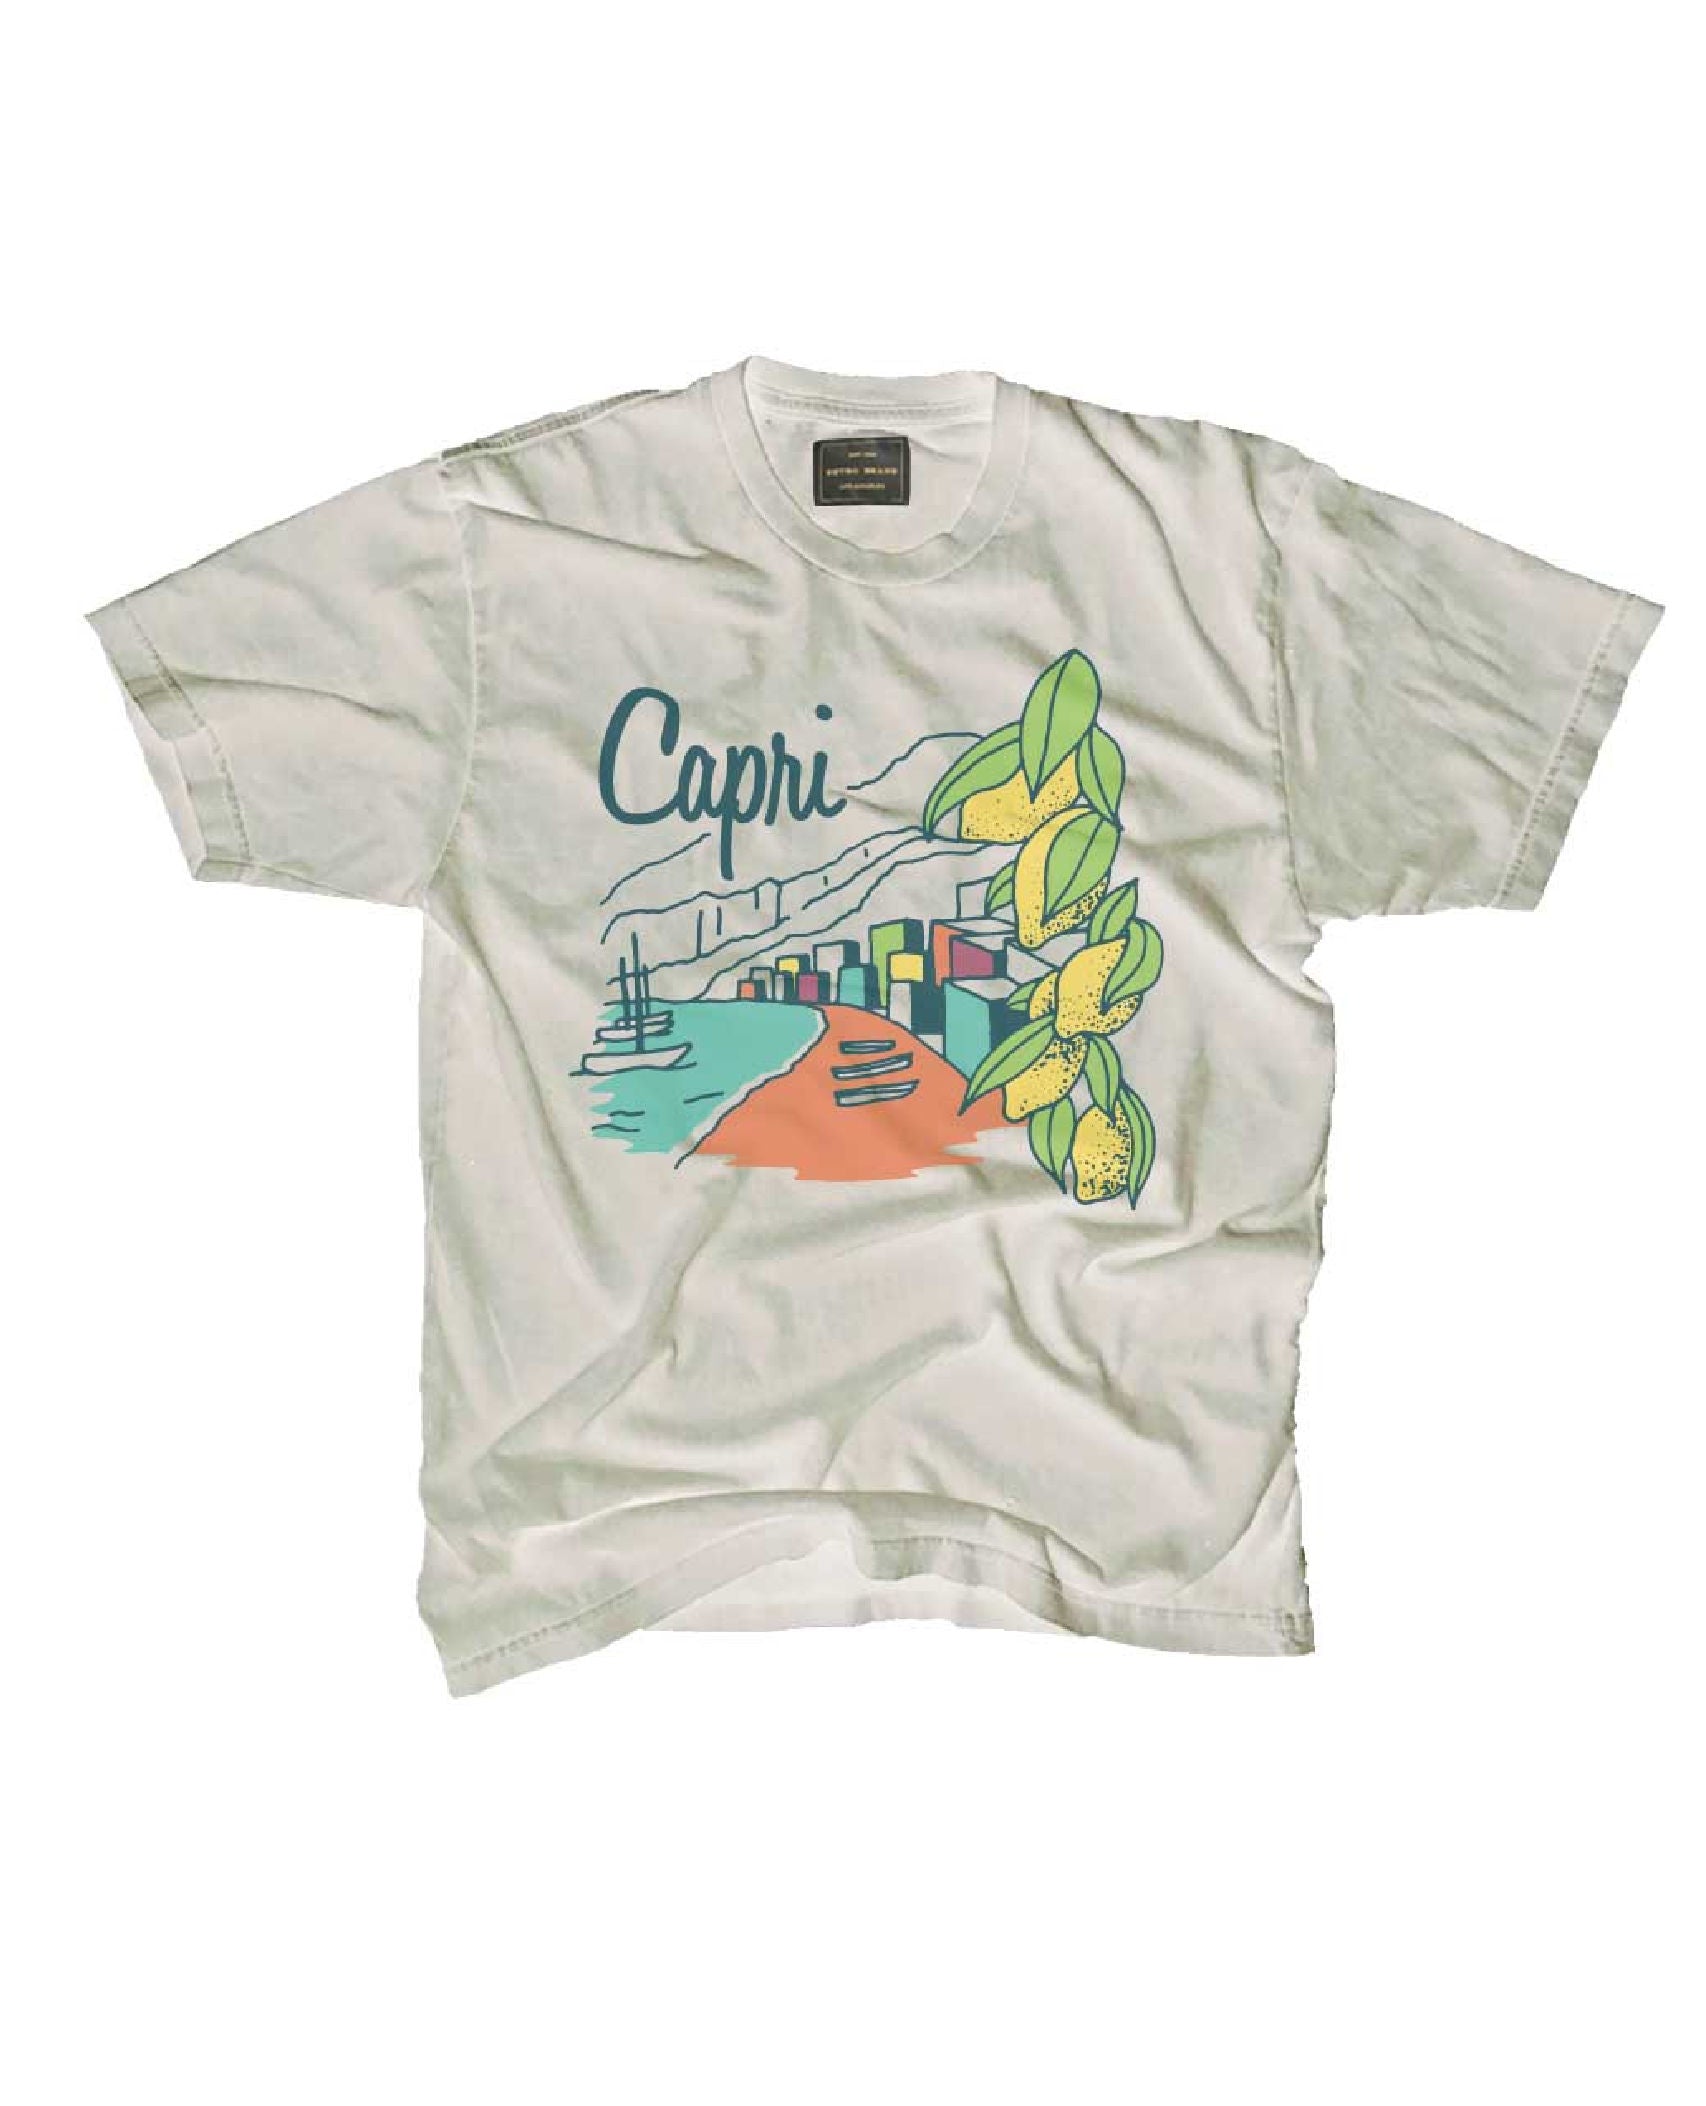 Capri Short Sleeve Tee Shirt